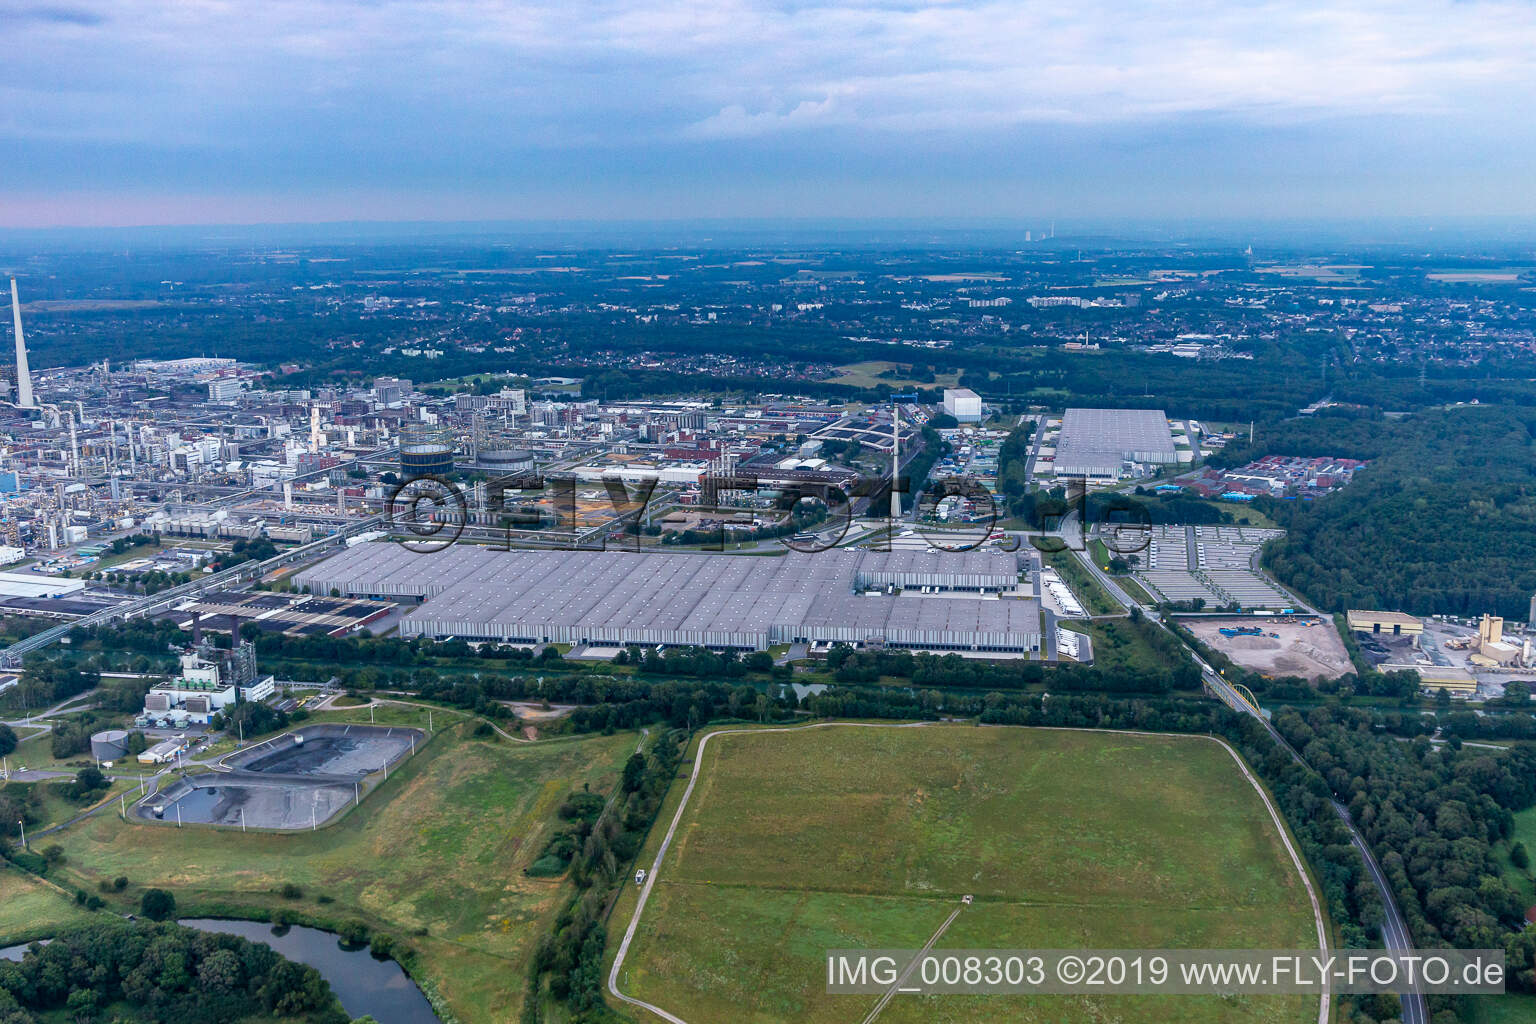 Aerial view of Chemical park Marl in Marl in the state North Rhine-Westphalia, Germany